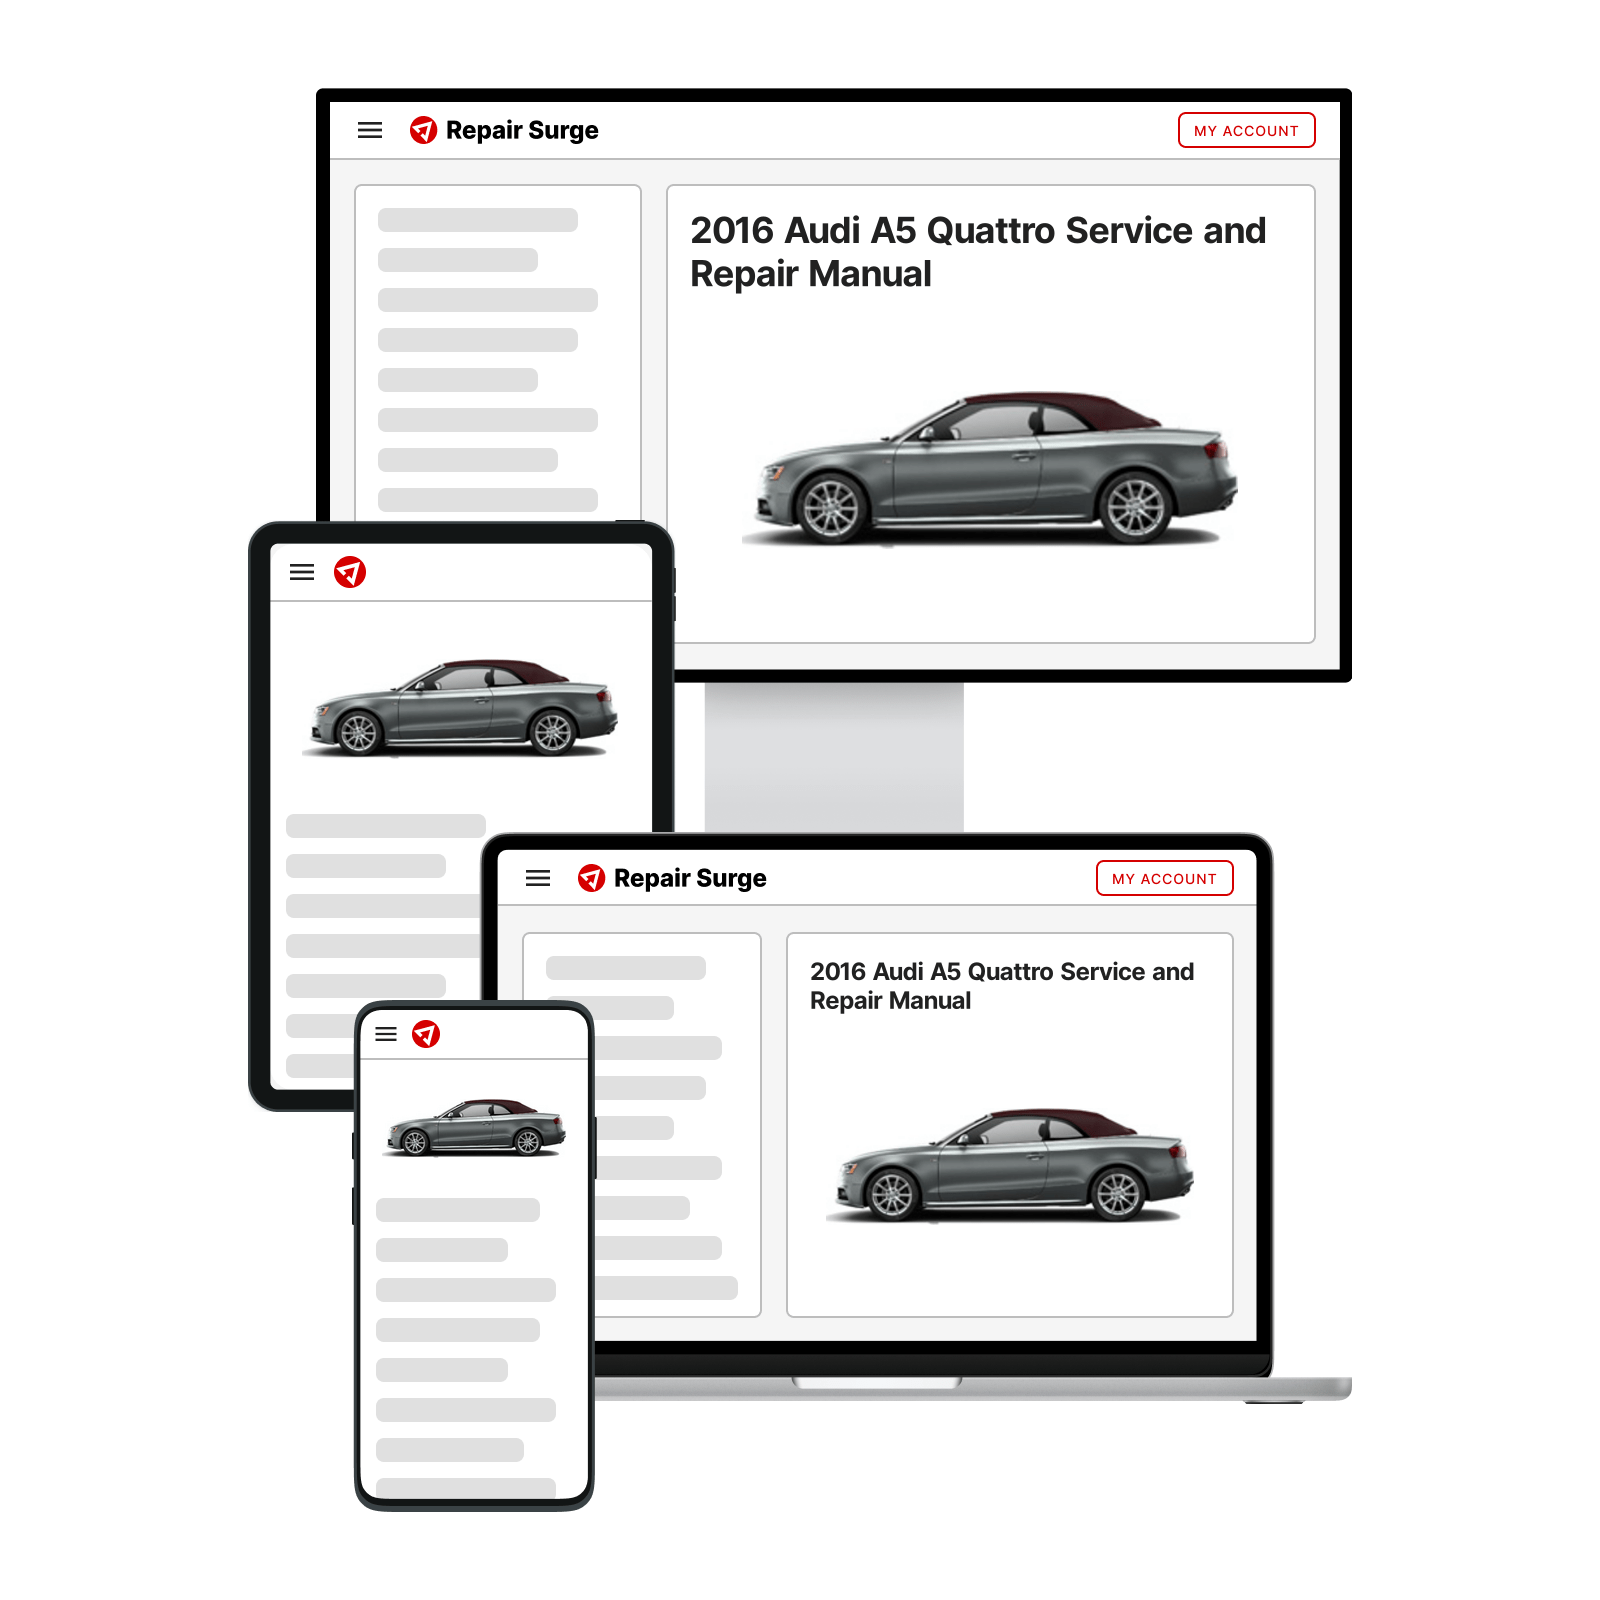 2016 Audi A5 Quattro service and repair manual hero image